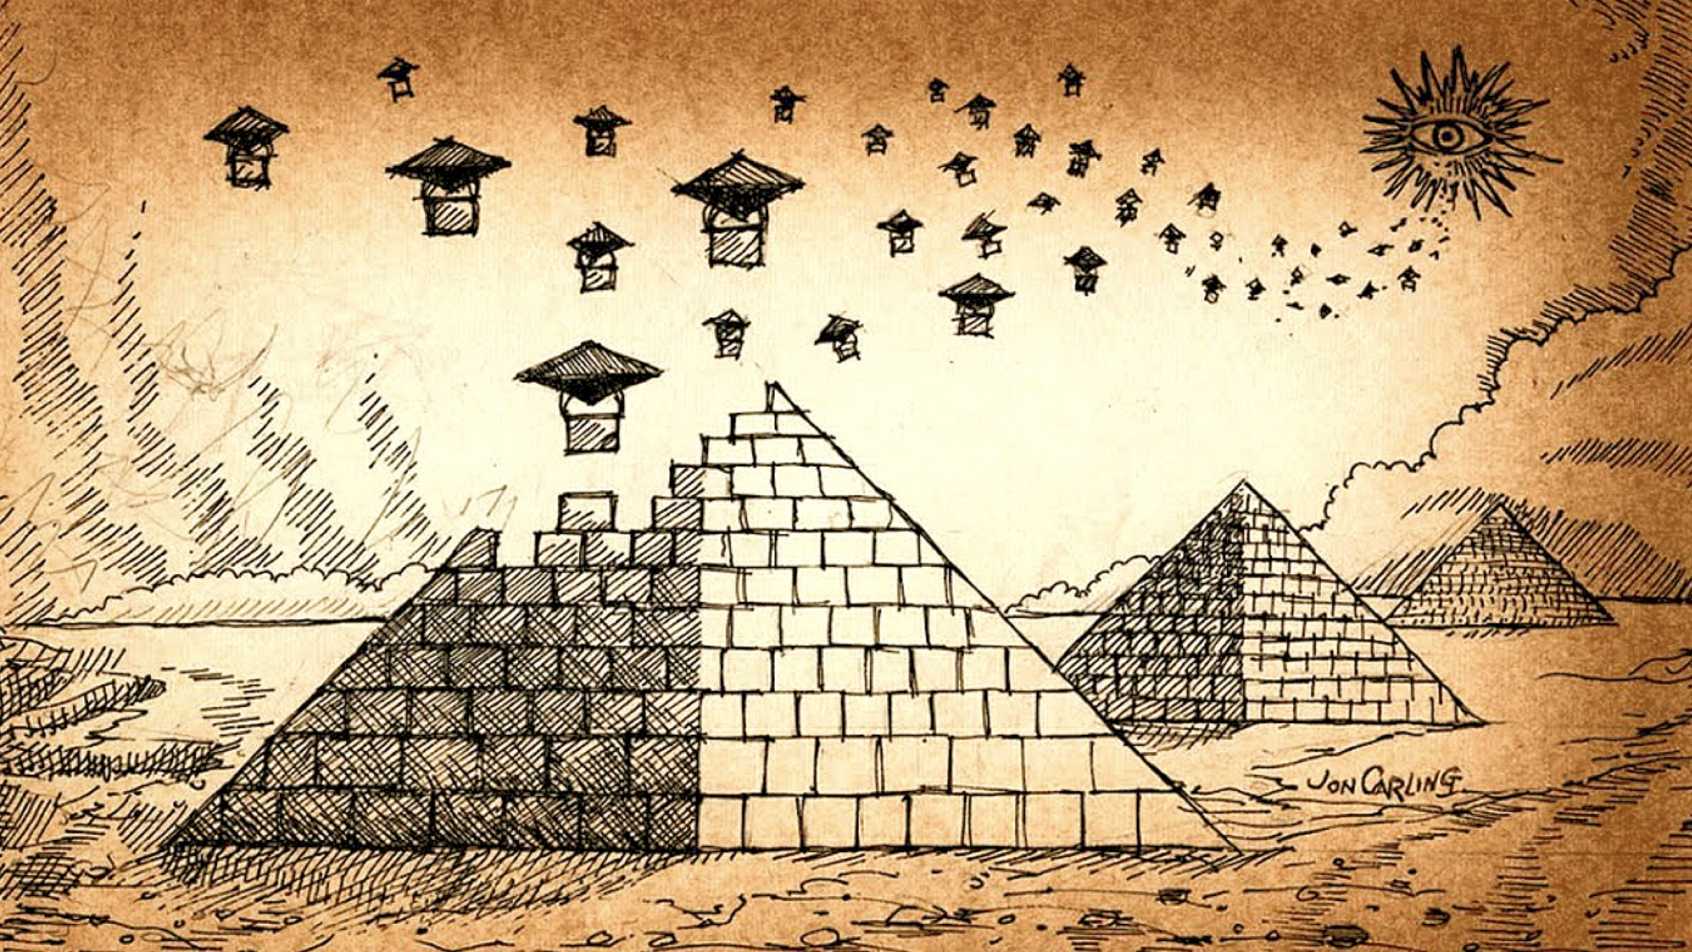 Construction of pyramid